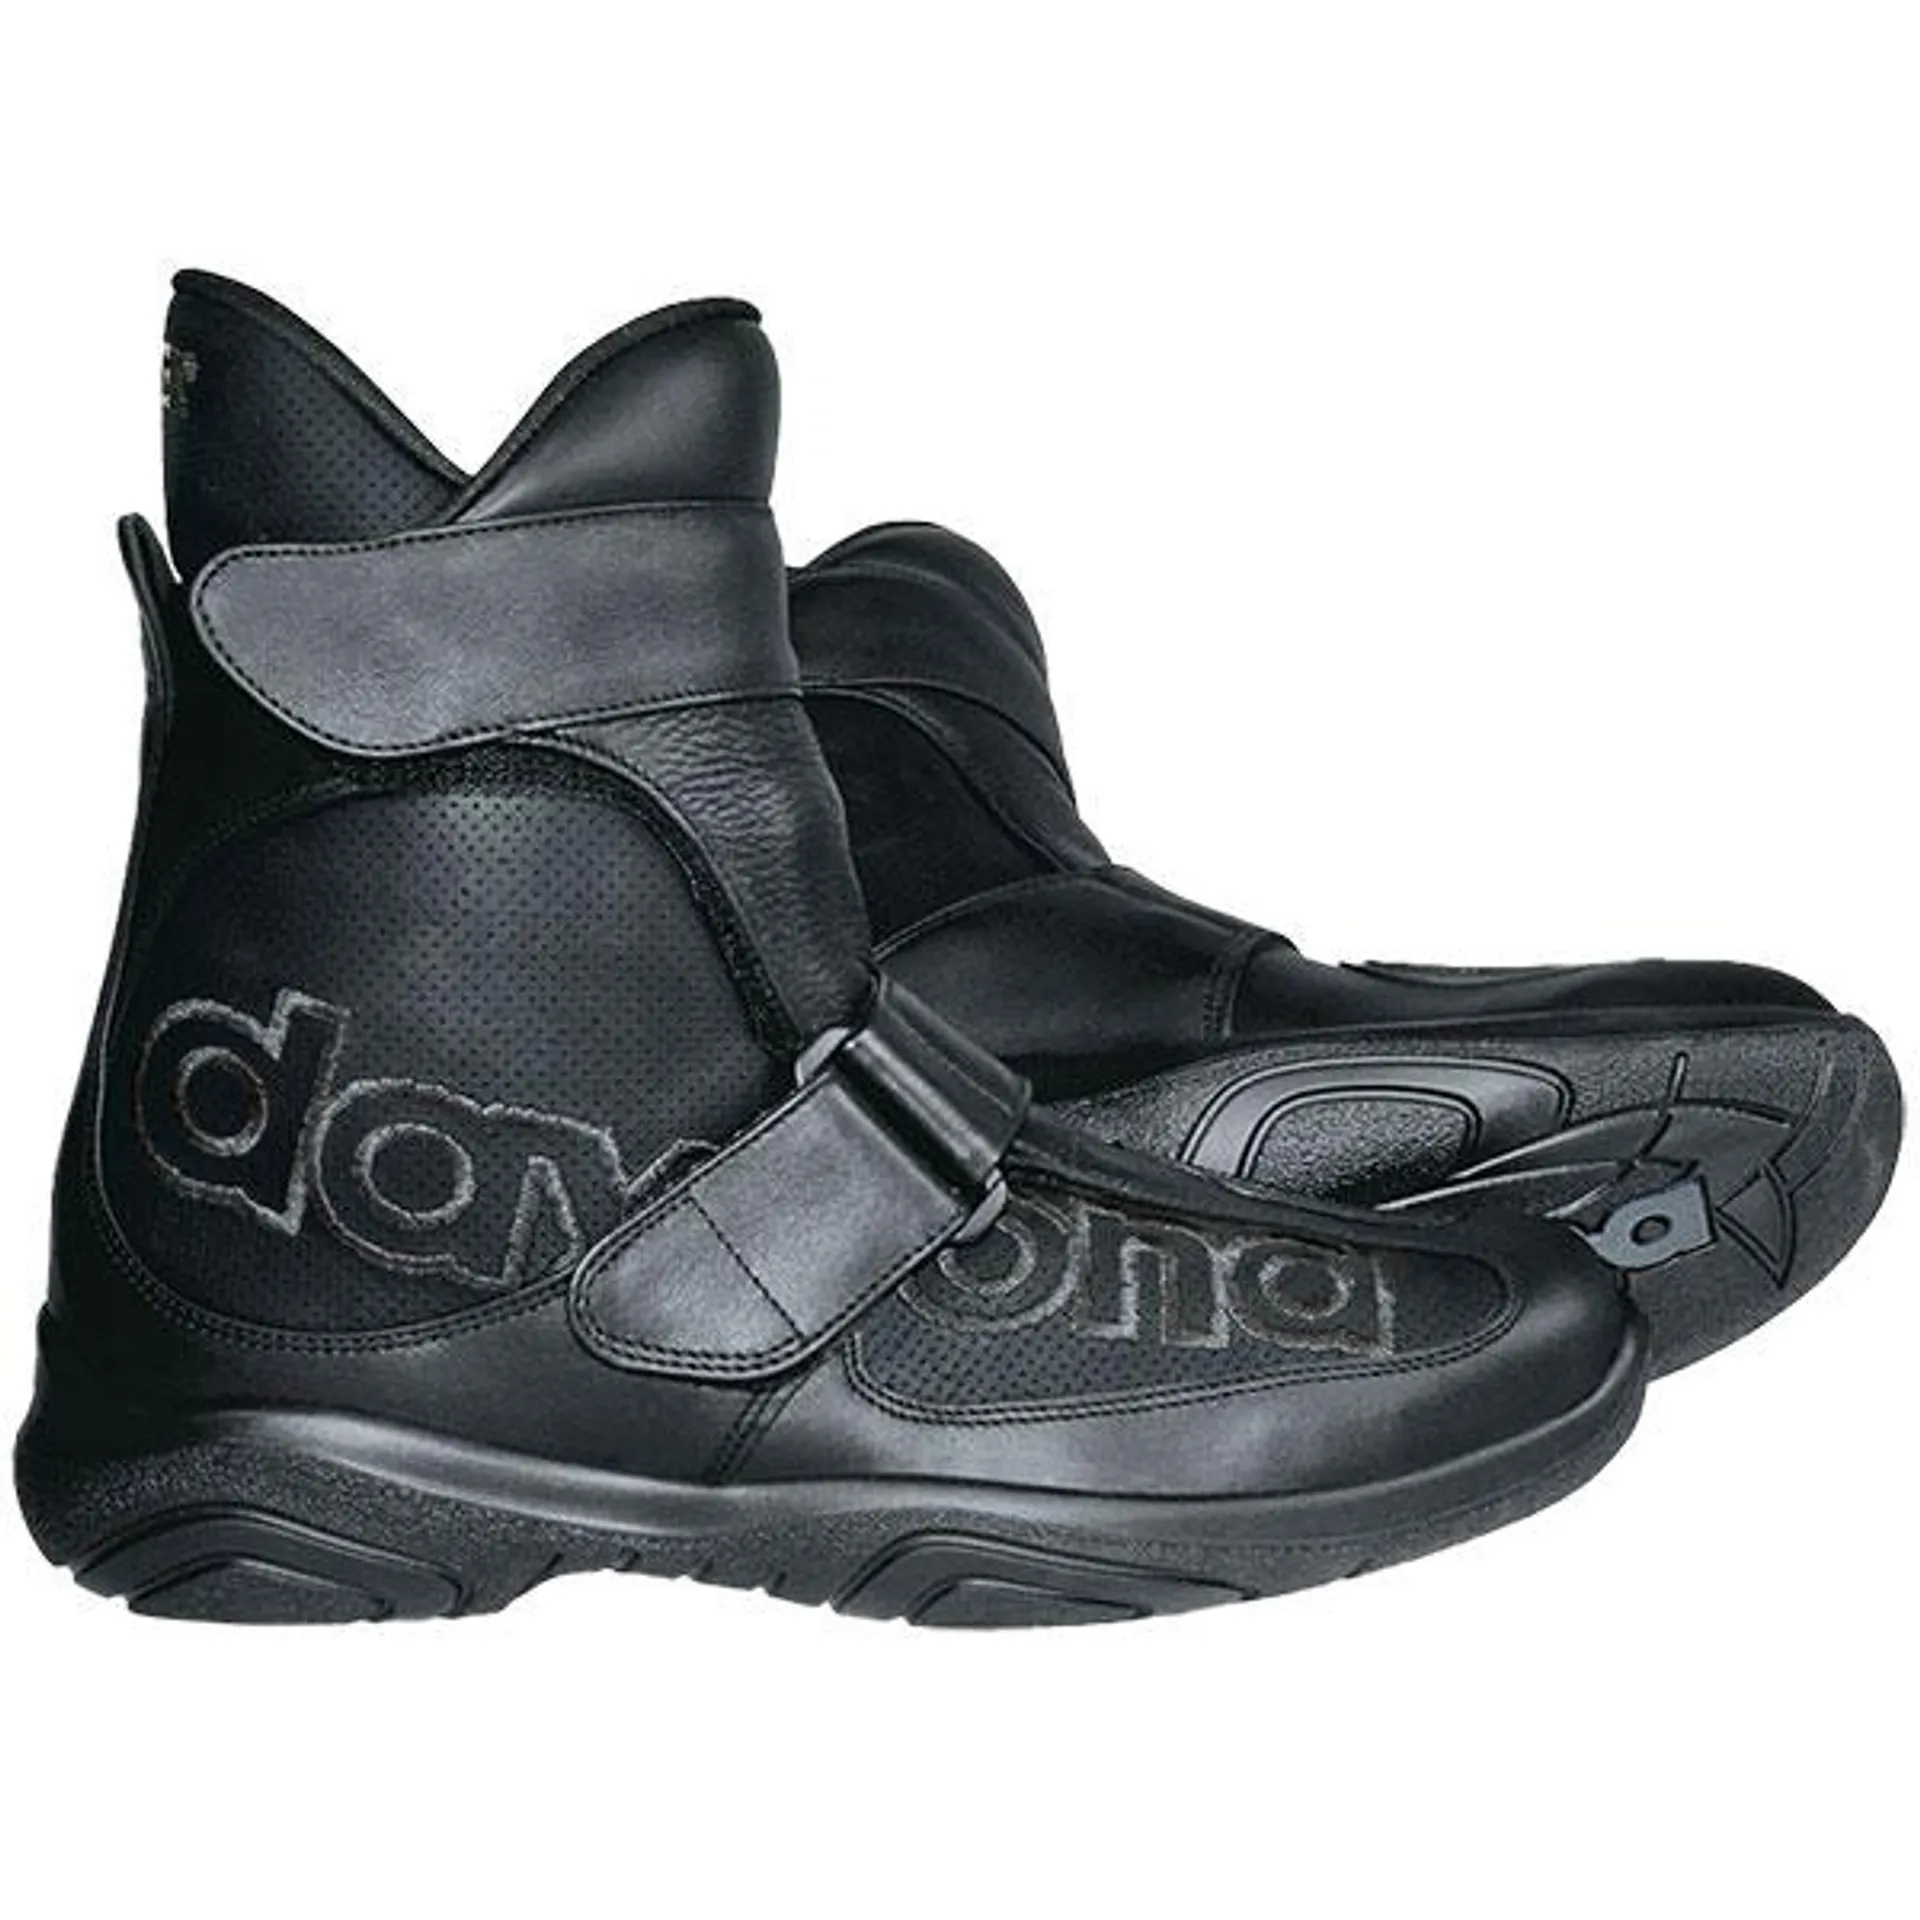 Daytona Journey Gore-Tex Boots - Black